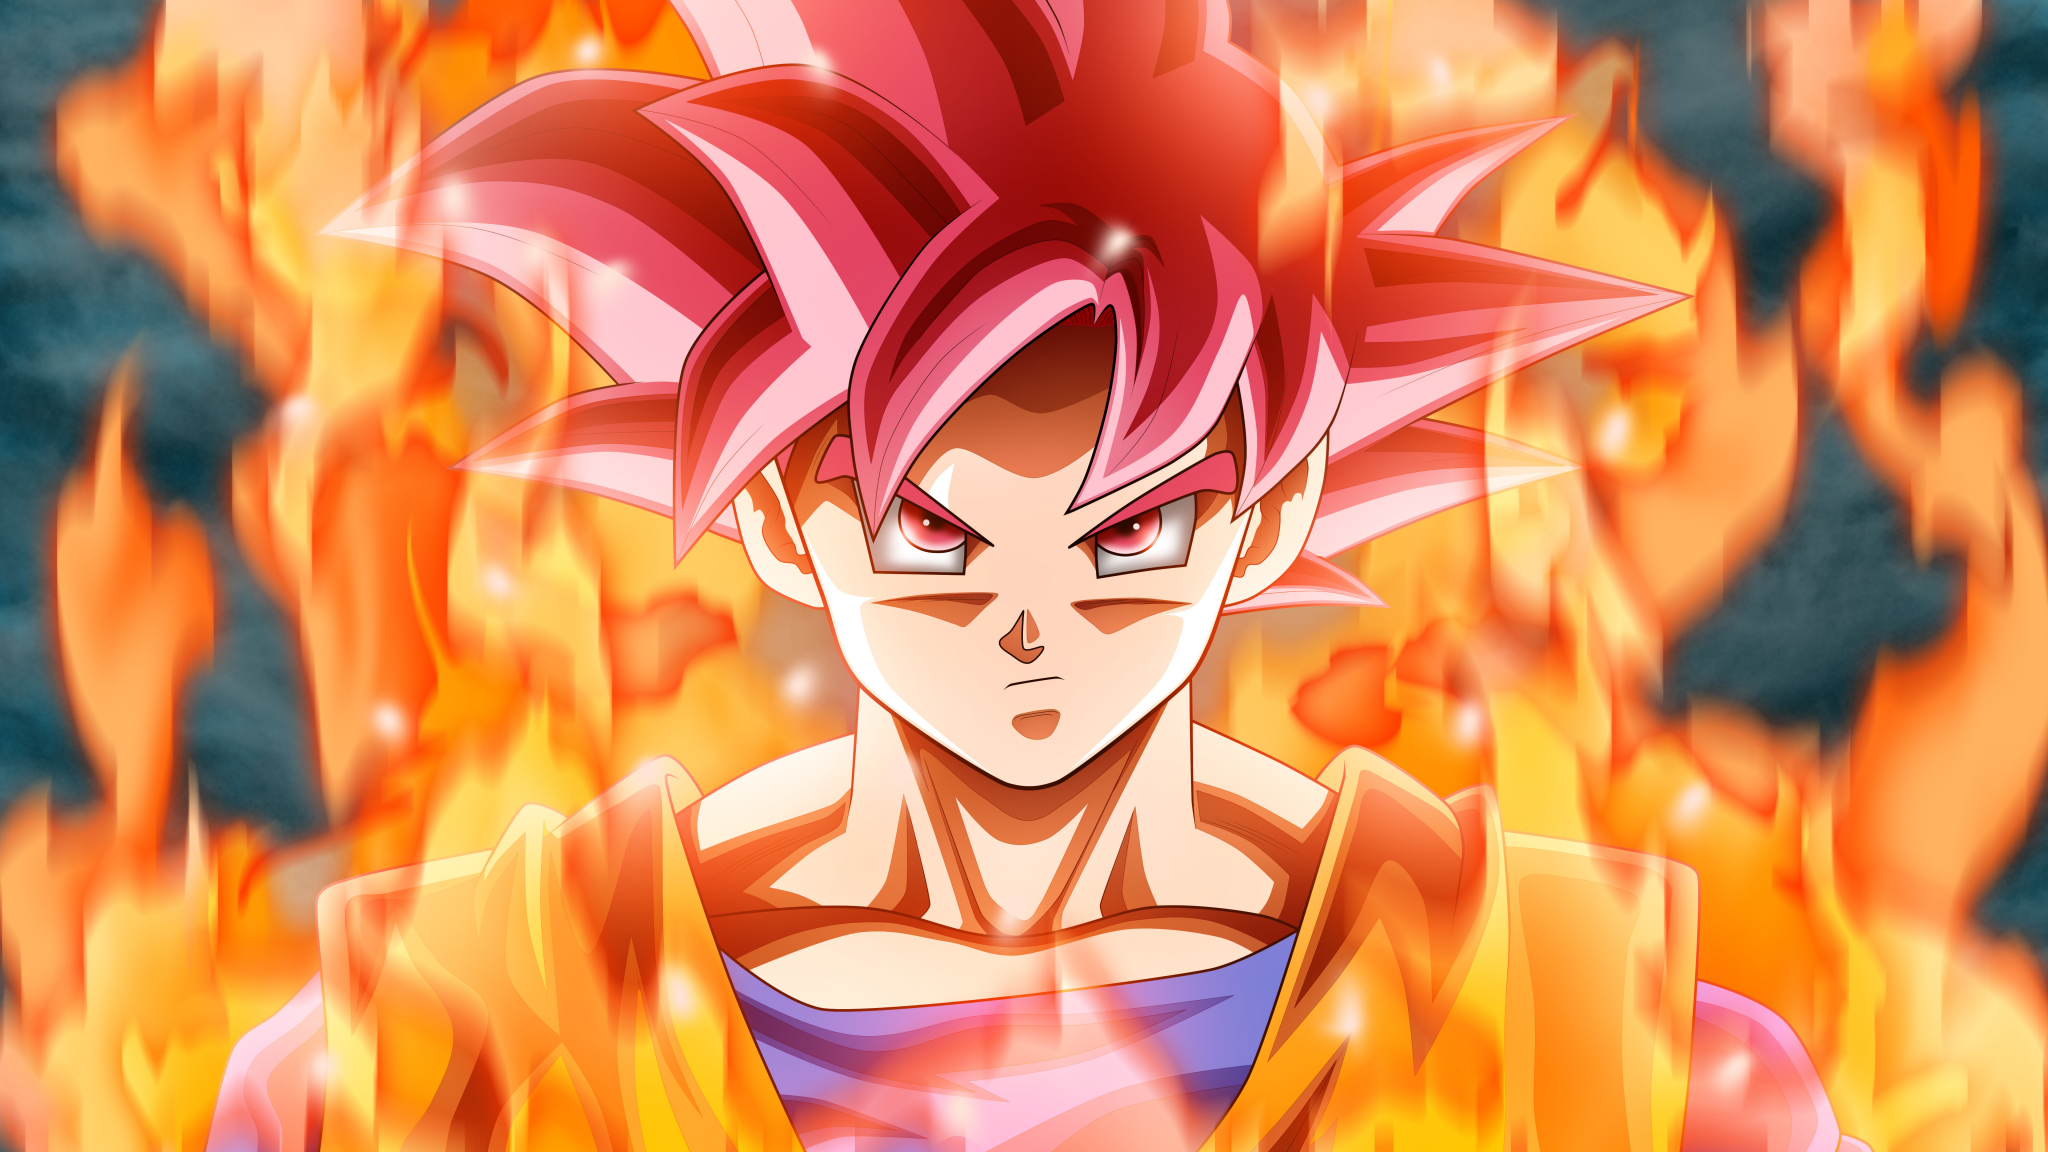 Download 48x1152 Wallpaper Goku Fire Dragon Ball Super Anime Dual Wide Widescreen 48x1152 Hd Image Background 1273